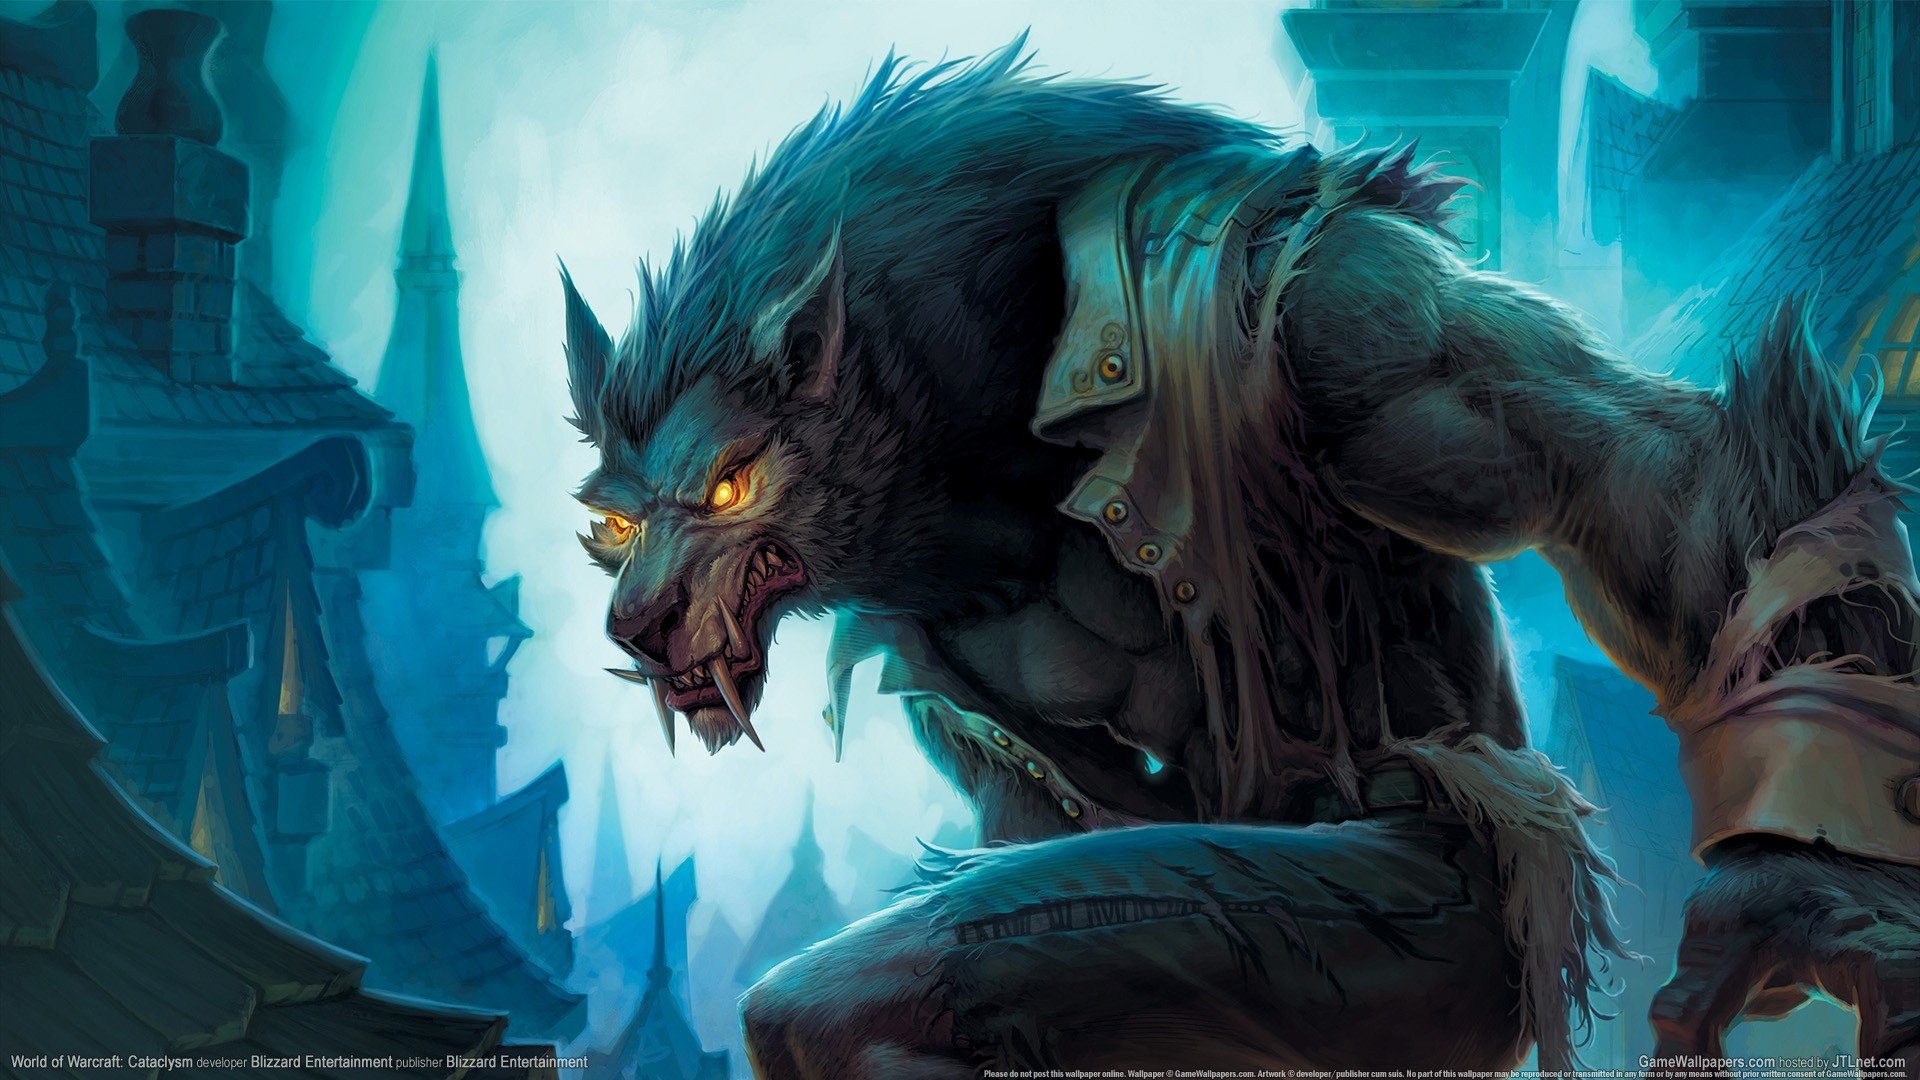 Best World Of Warcraft: Cataclysm wallpaper ID:62519 for High Resolution full hd 1080p computer